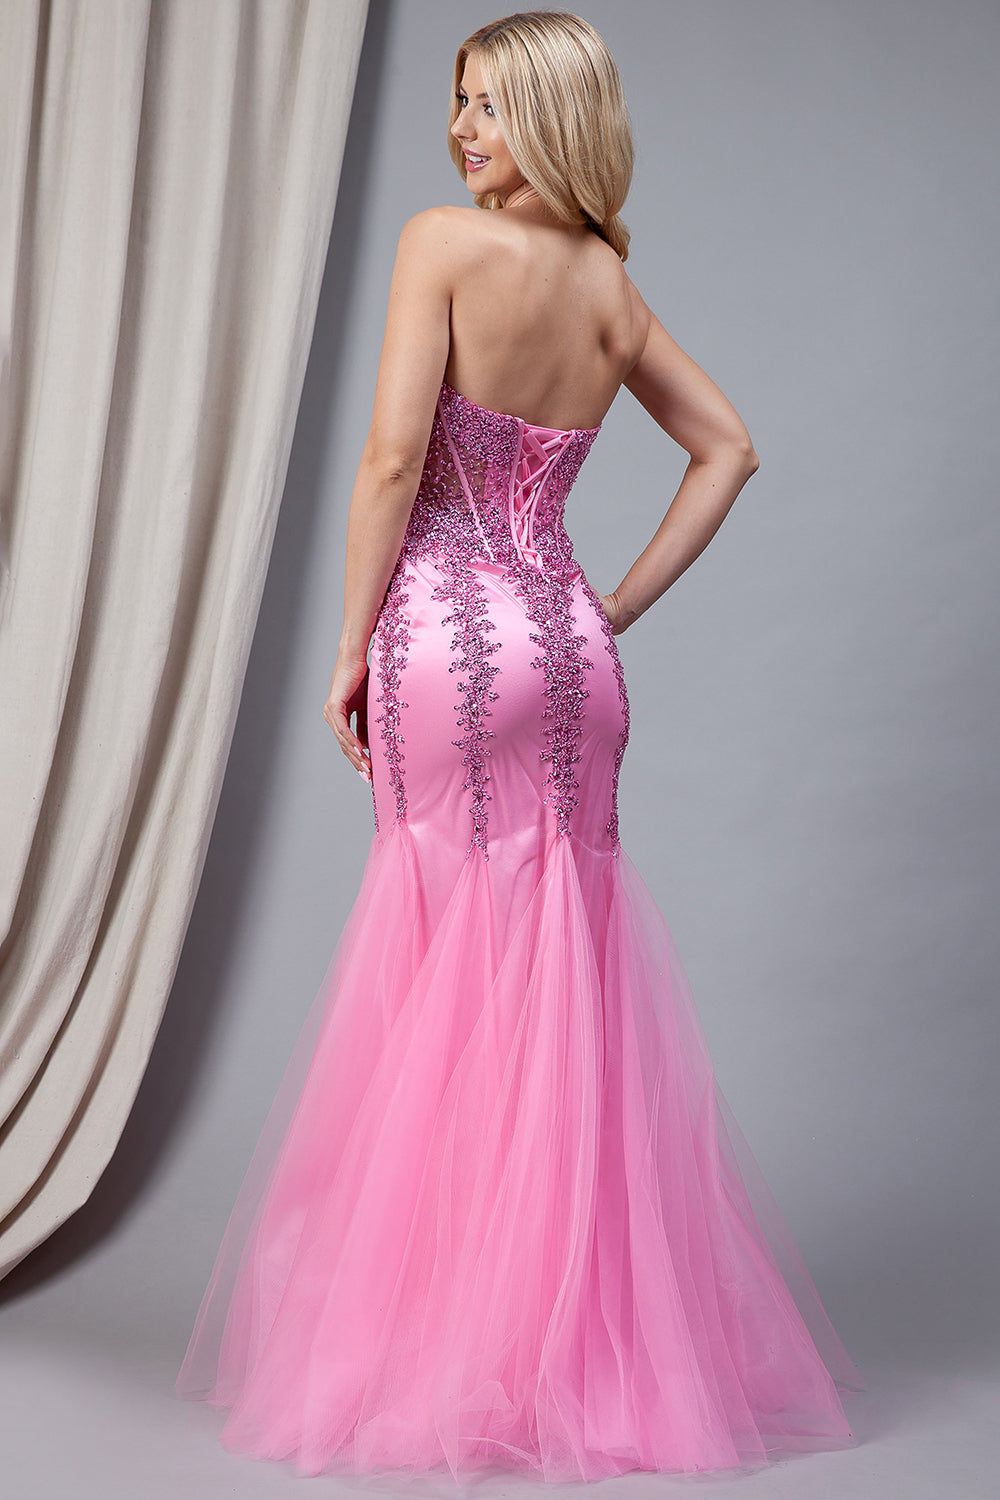 Strapless Sweetheart Embroidered Bodice Mermaid Long Wedding & Evening Dress AC774-Evening Dress-smcfashion.com